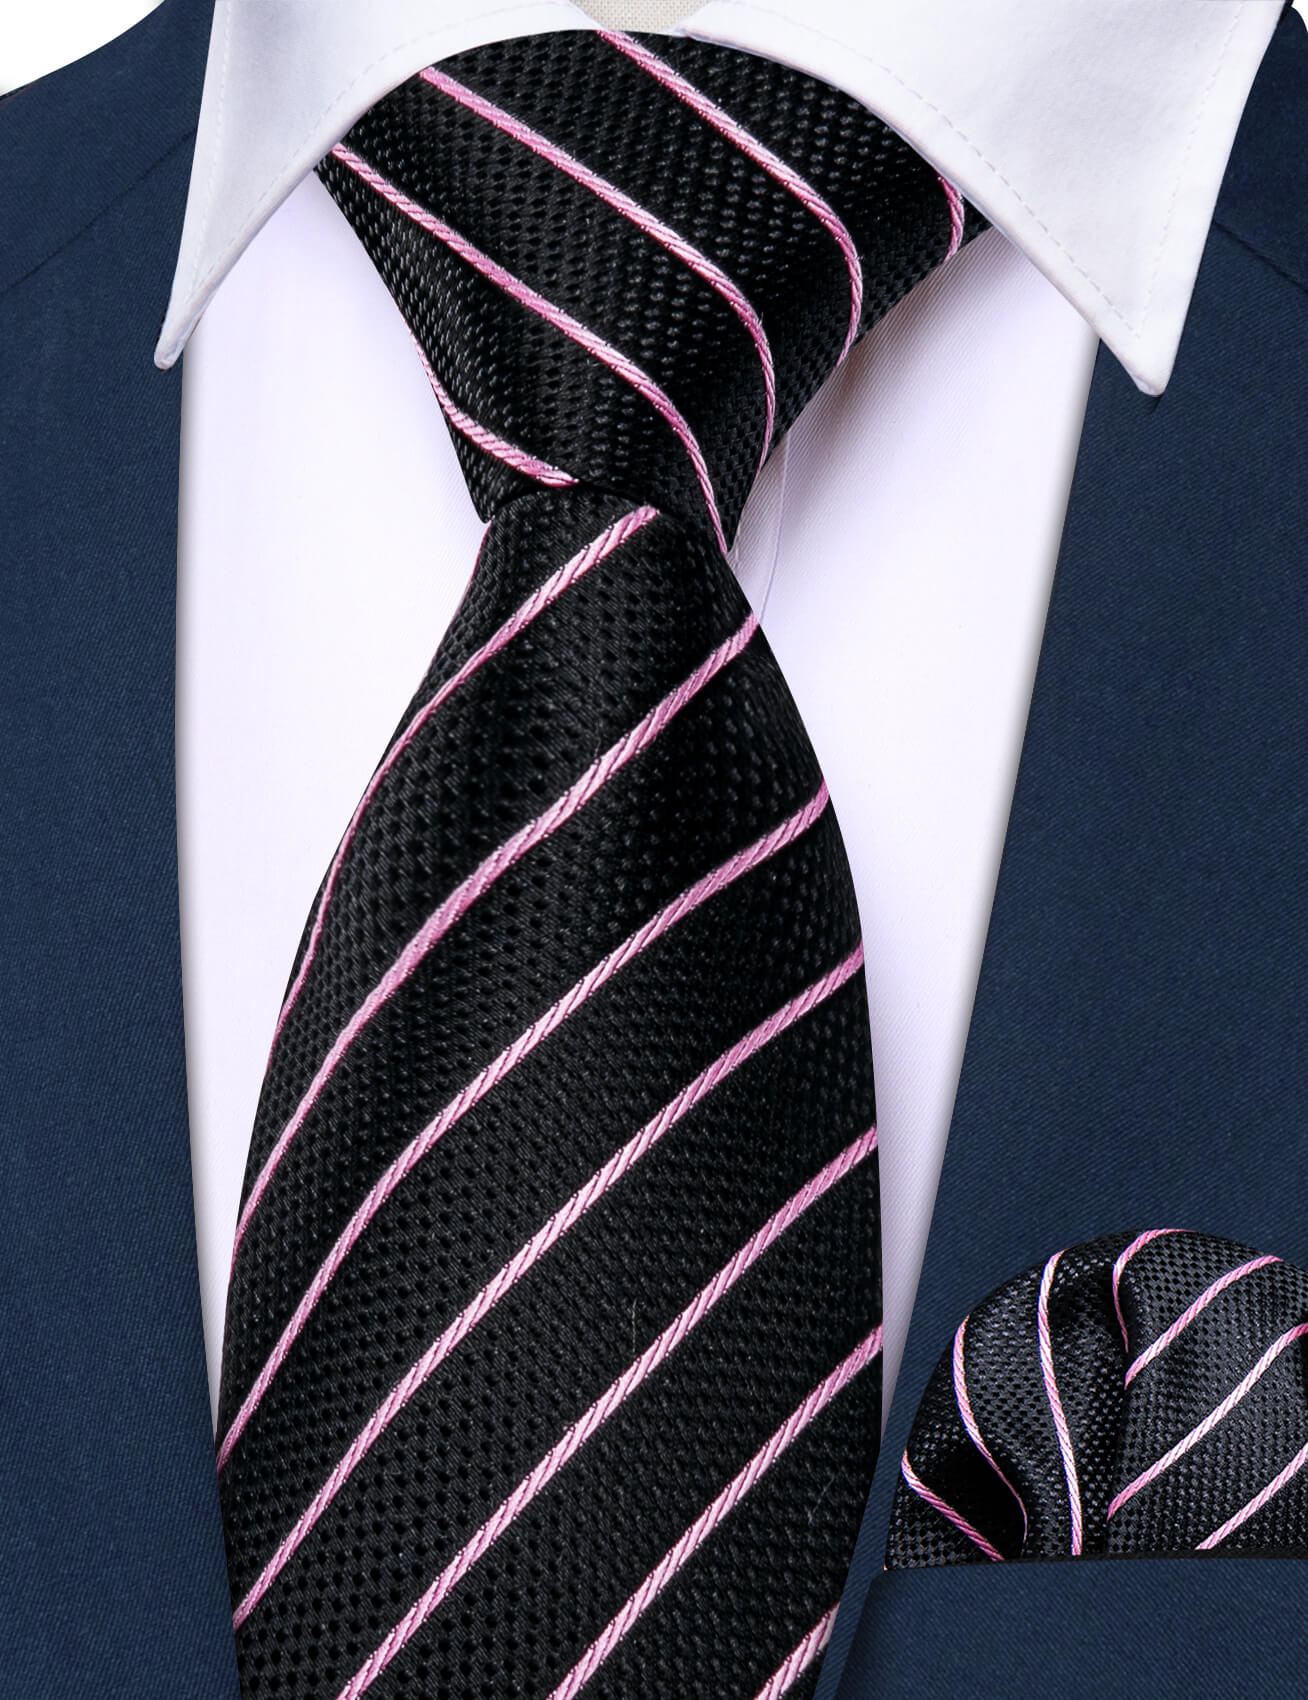 Barry.wang Kids Tie Black Pink Striped Children's Tie Hanky Set Hot